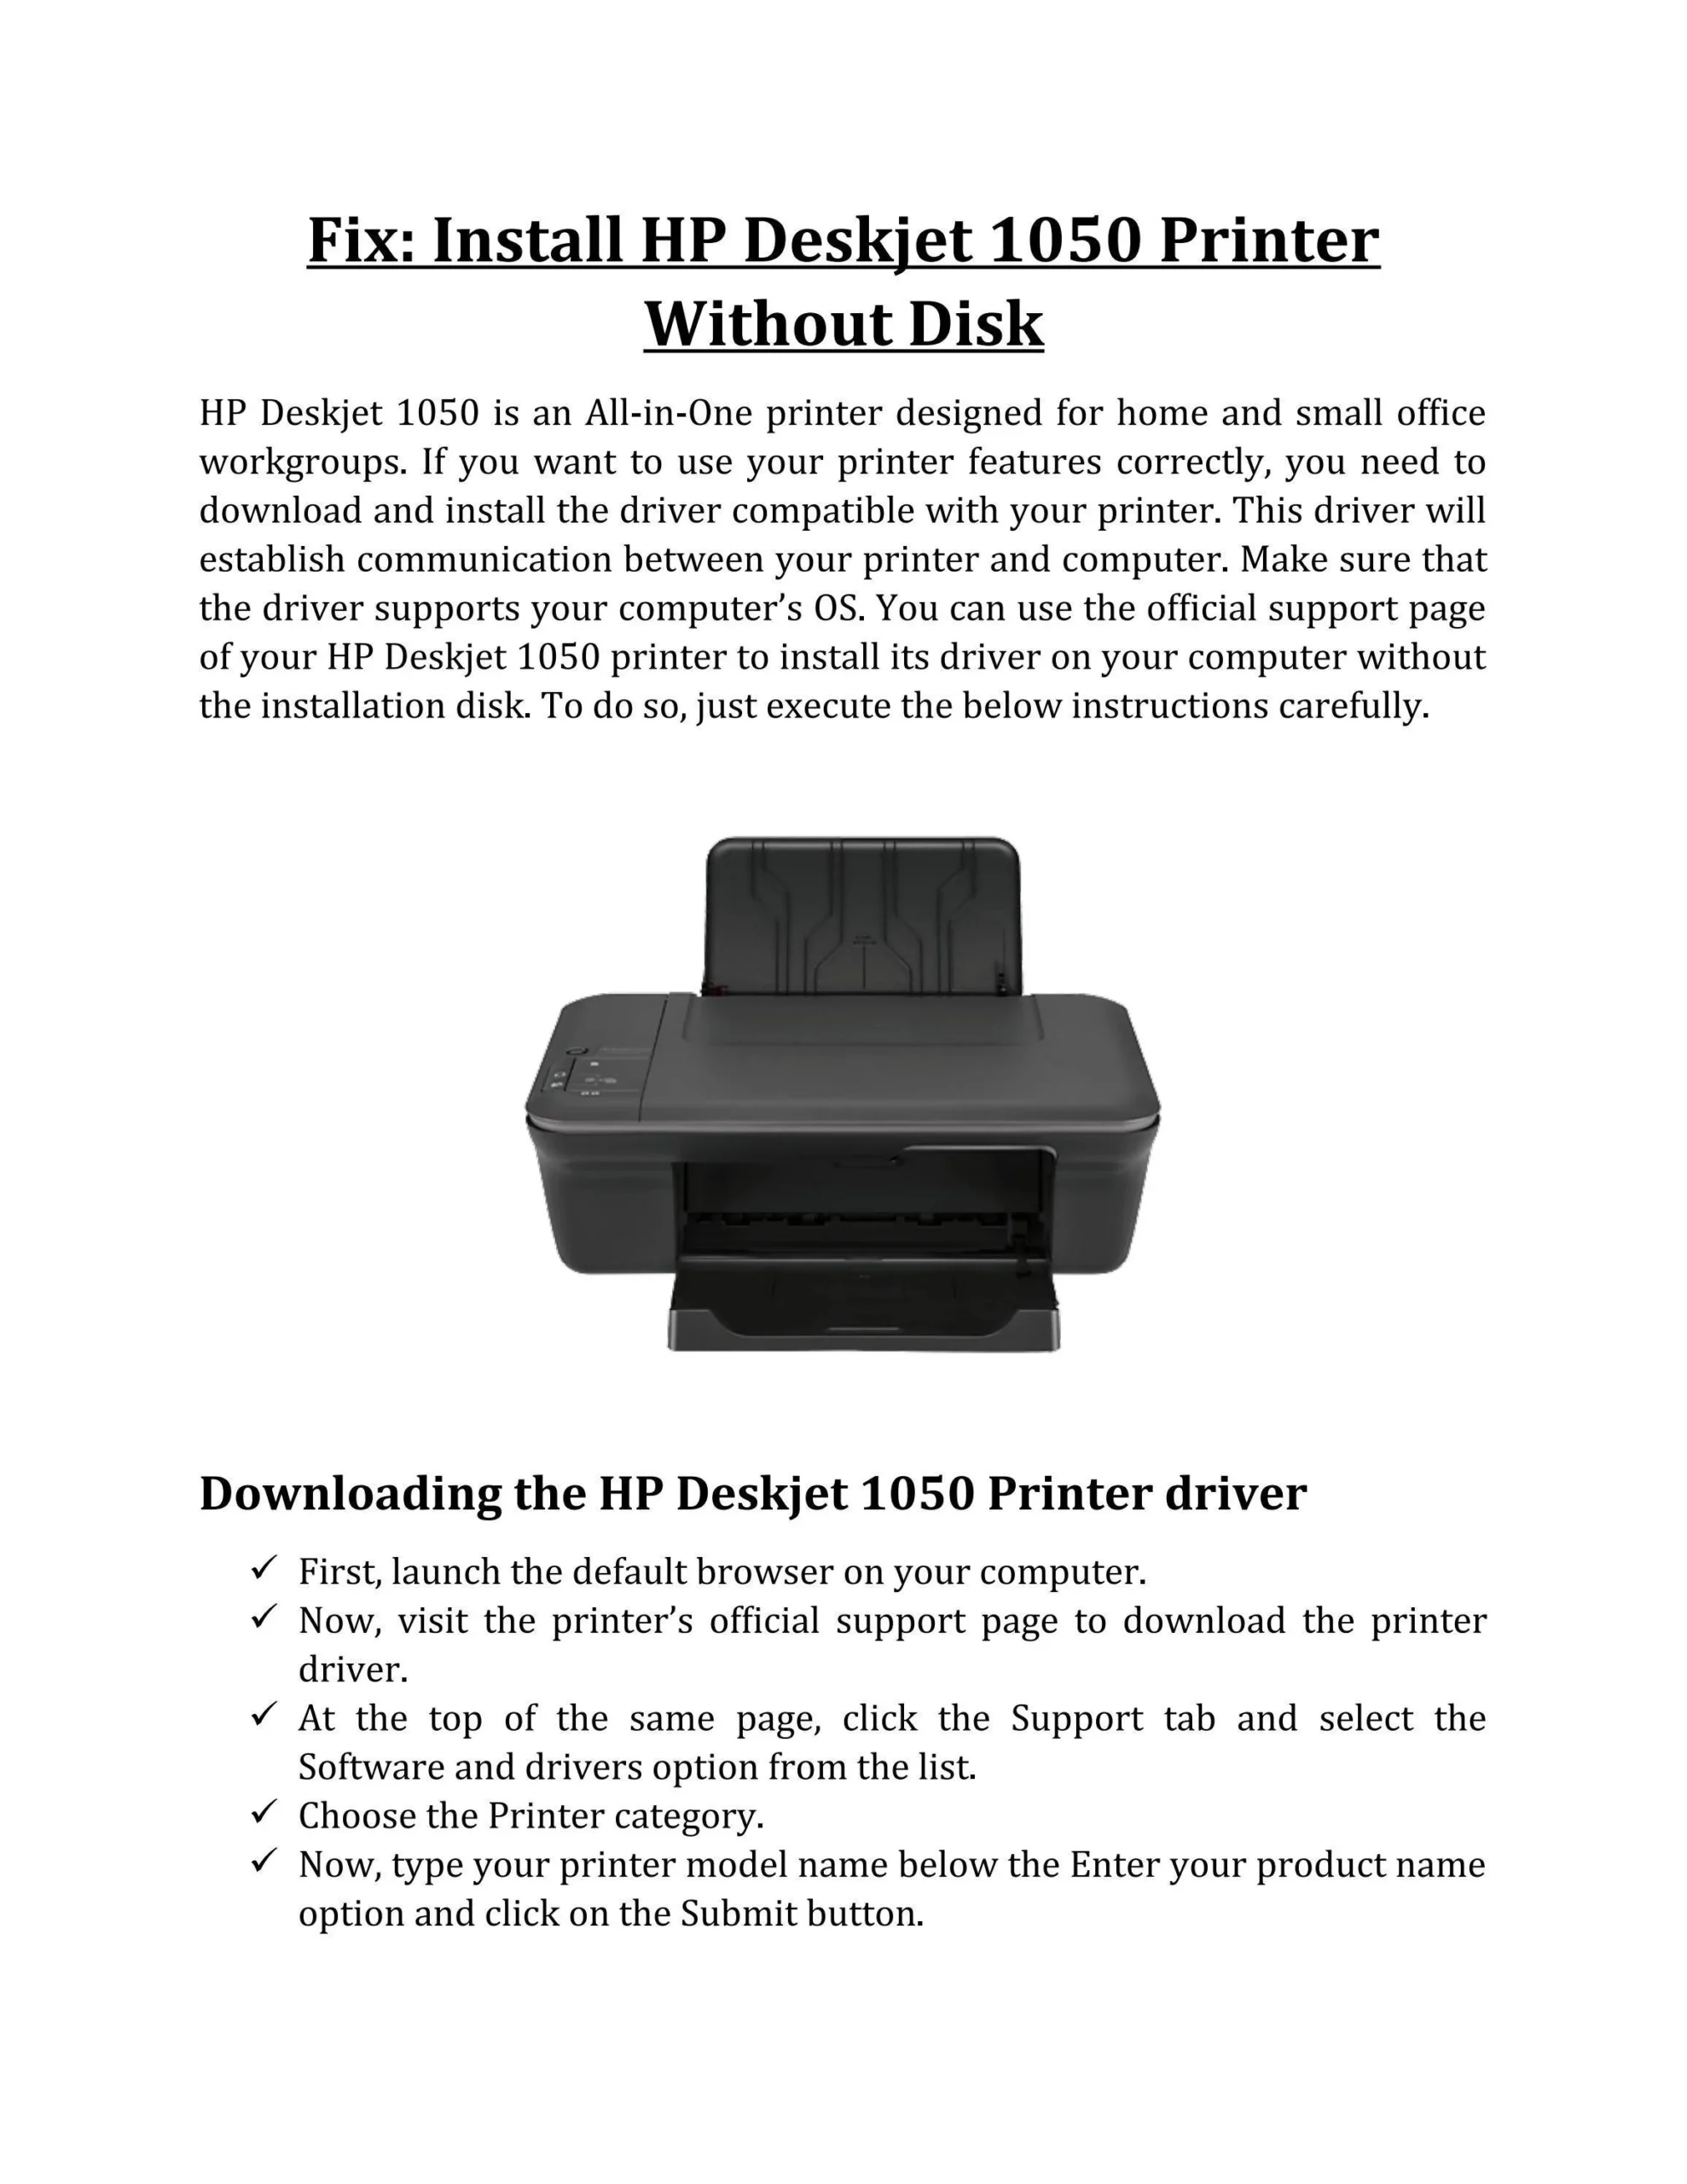 hewlett packard deskjet 1050a printer scanner and copier - How to install HP Deskjet 1050A without CD